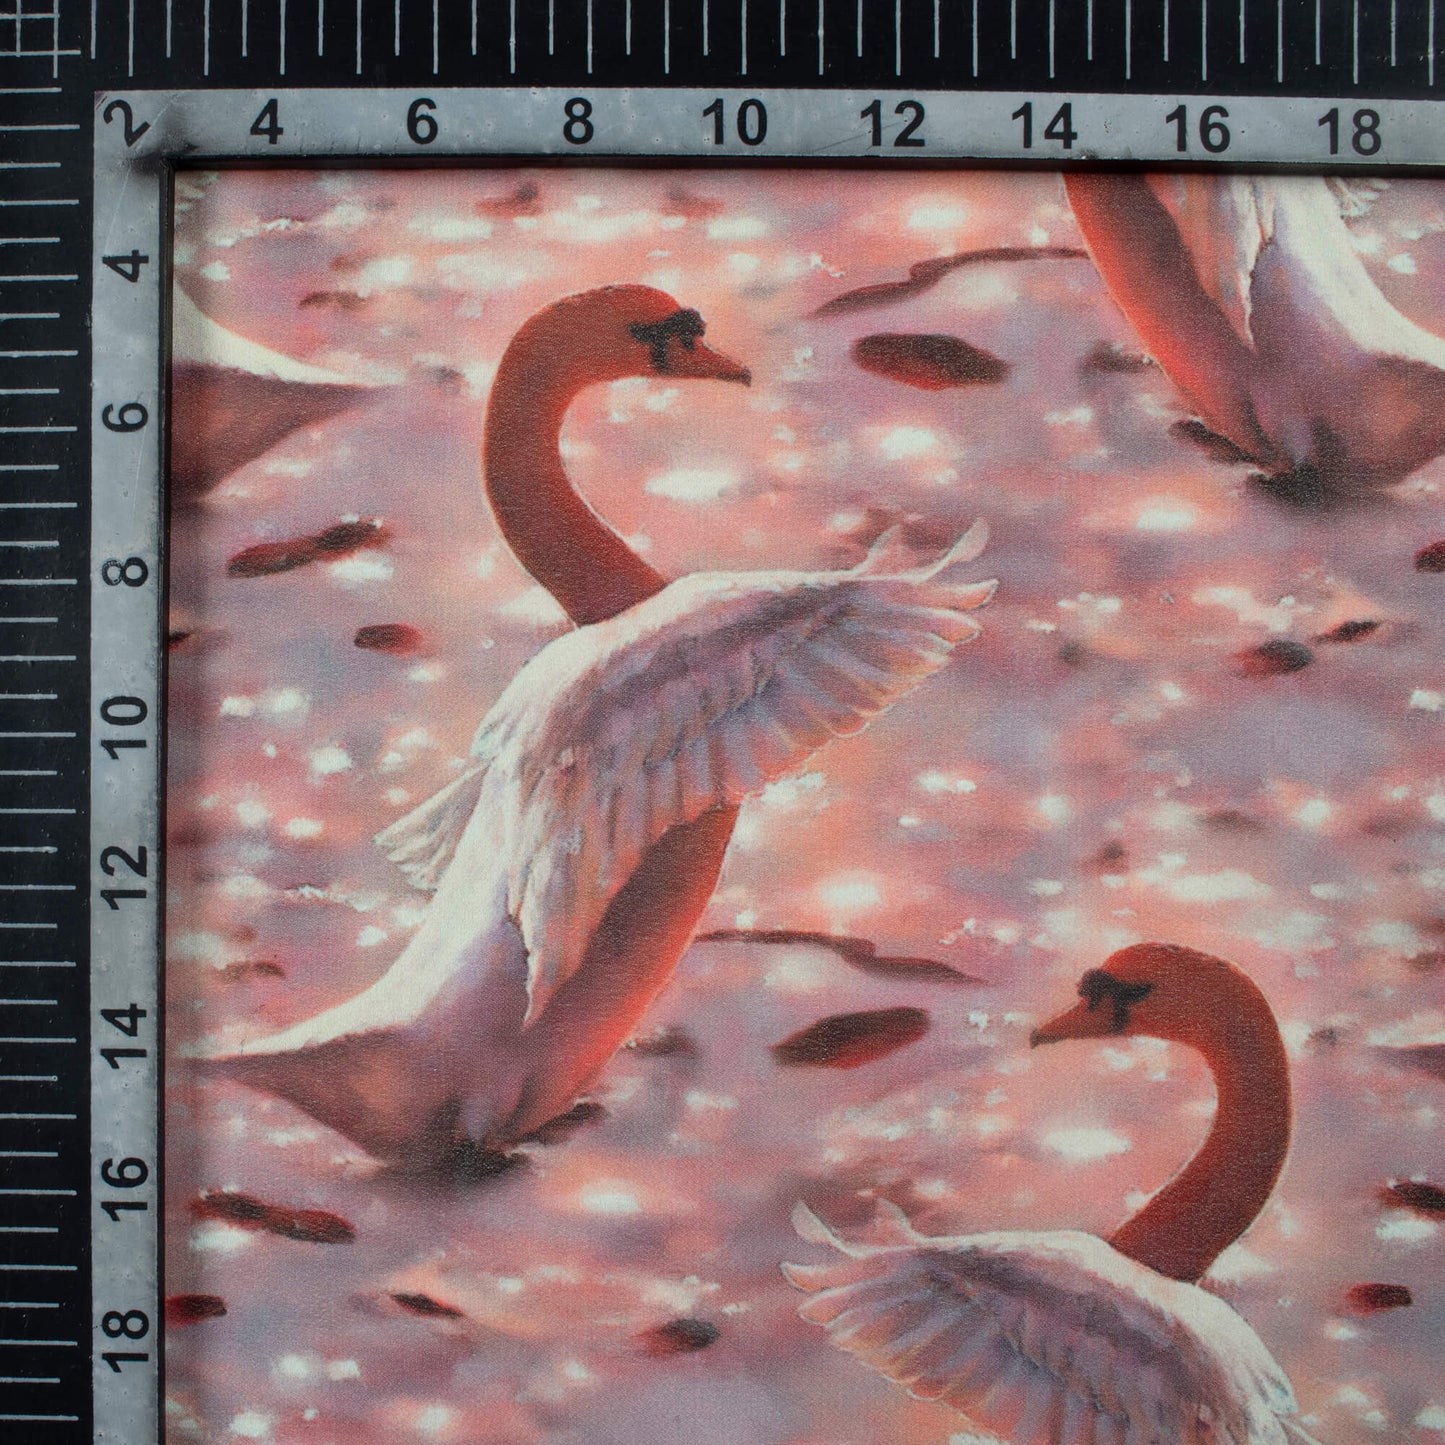 Reddish Brown Bird Pattern Digital Print Georgette Fabric